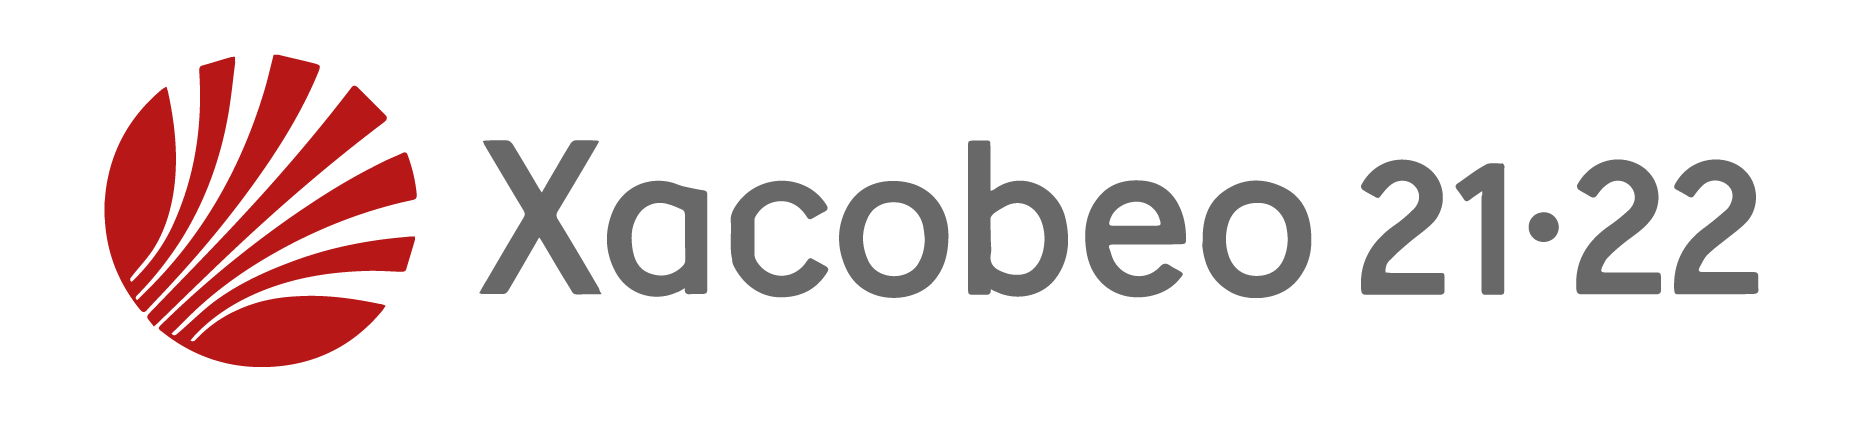 Logotipo Xacobeo